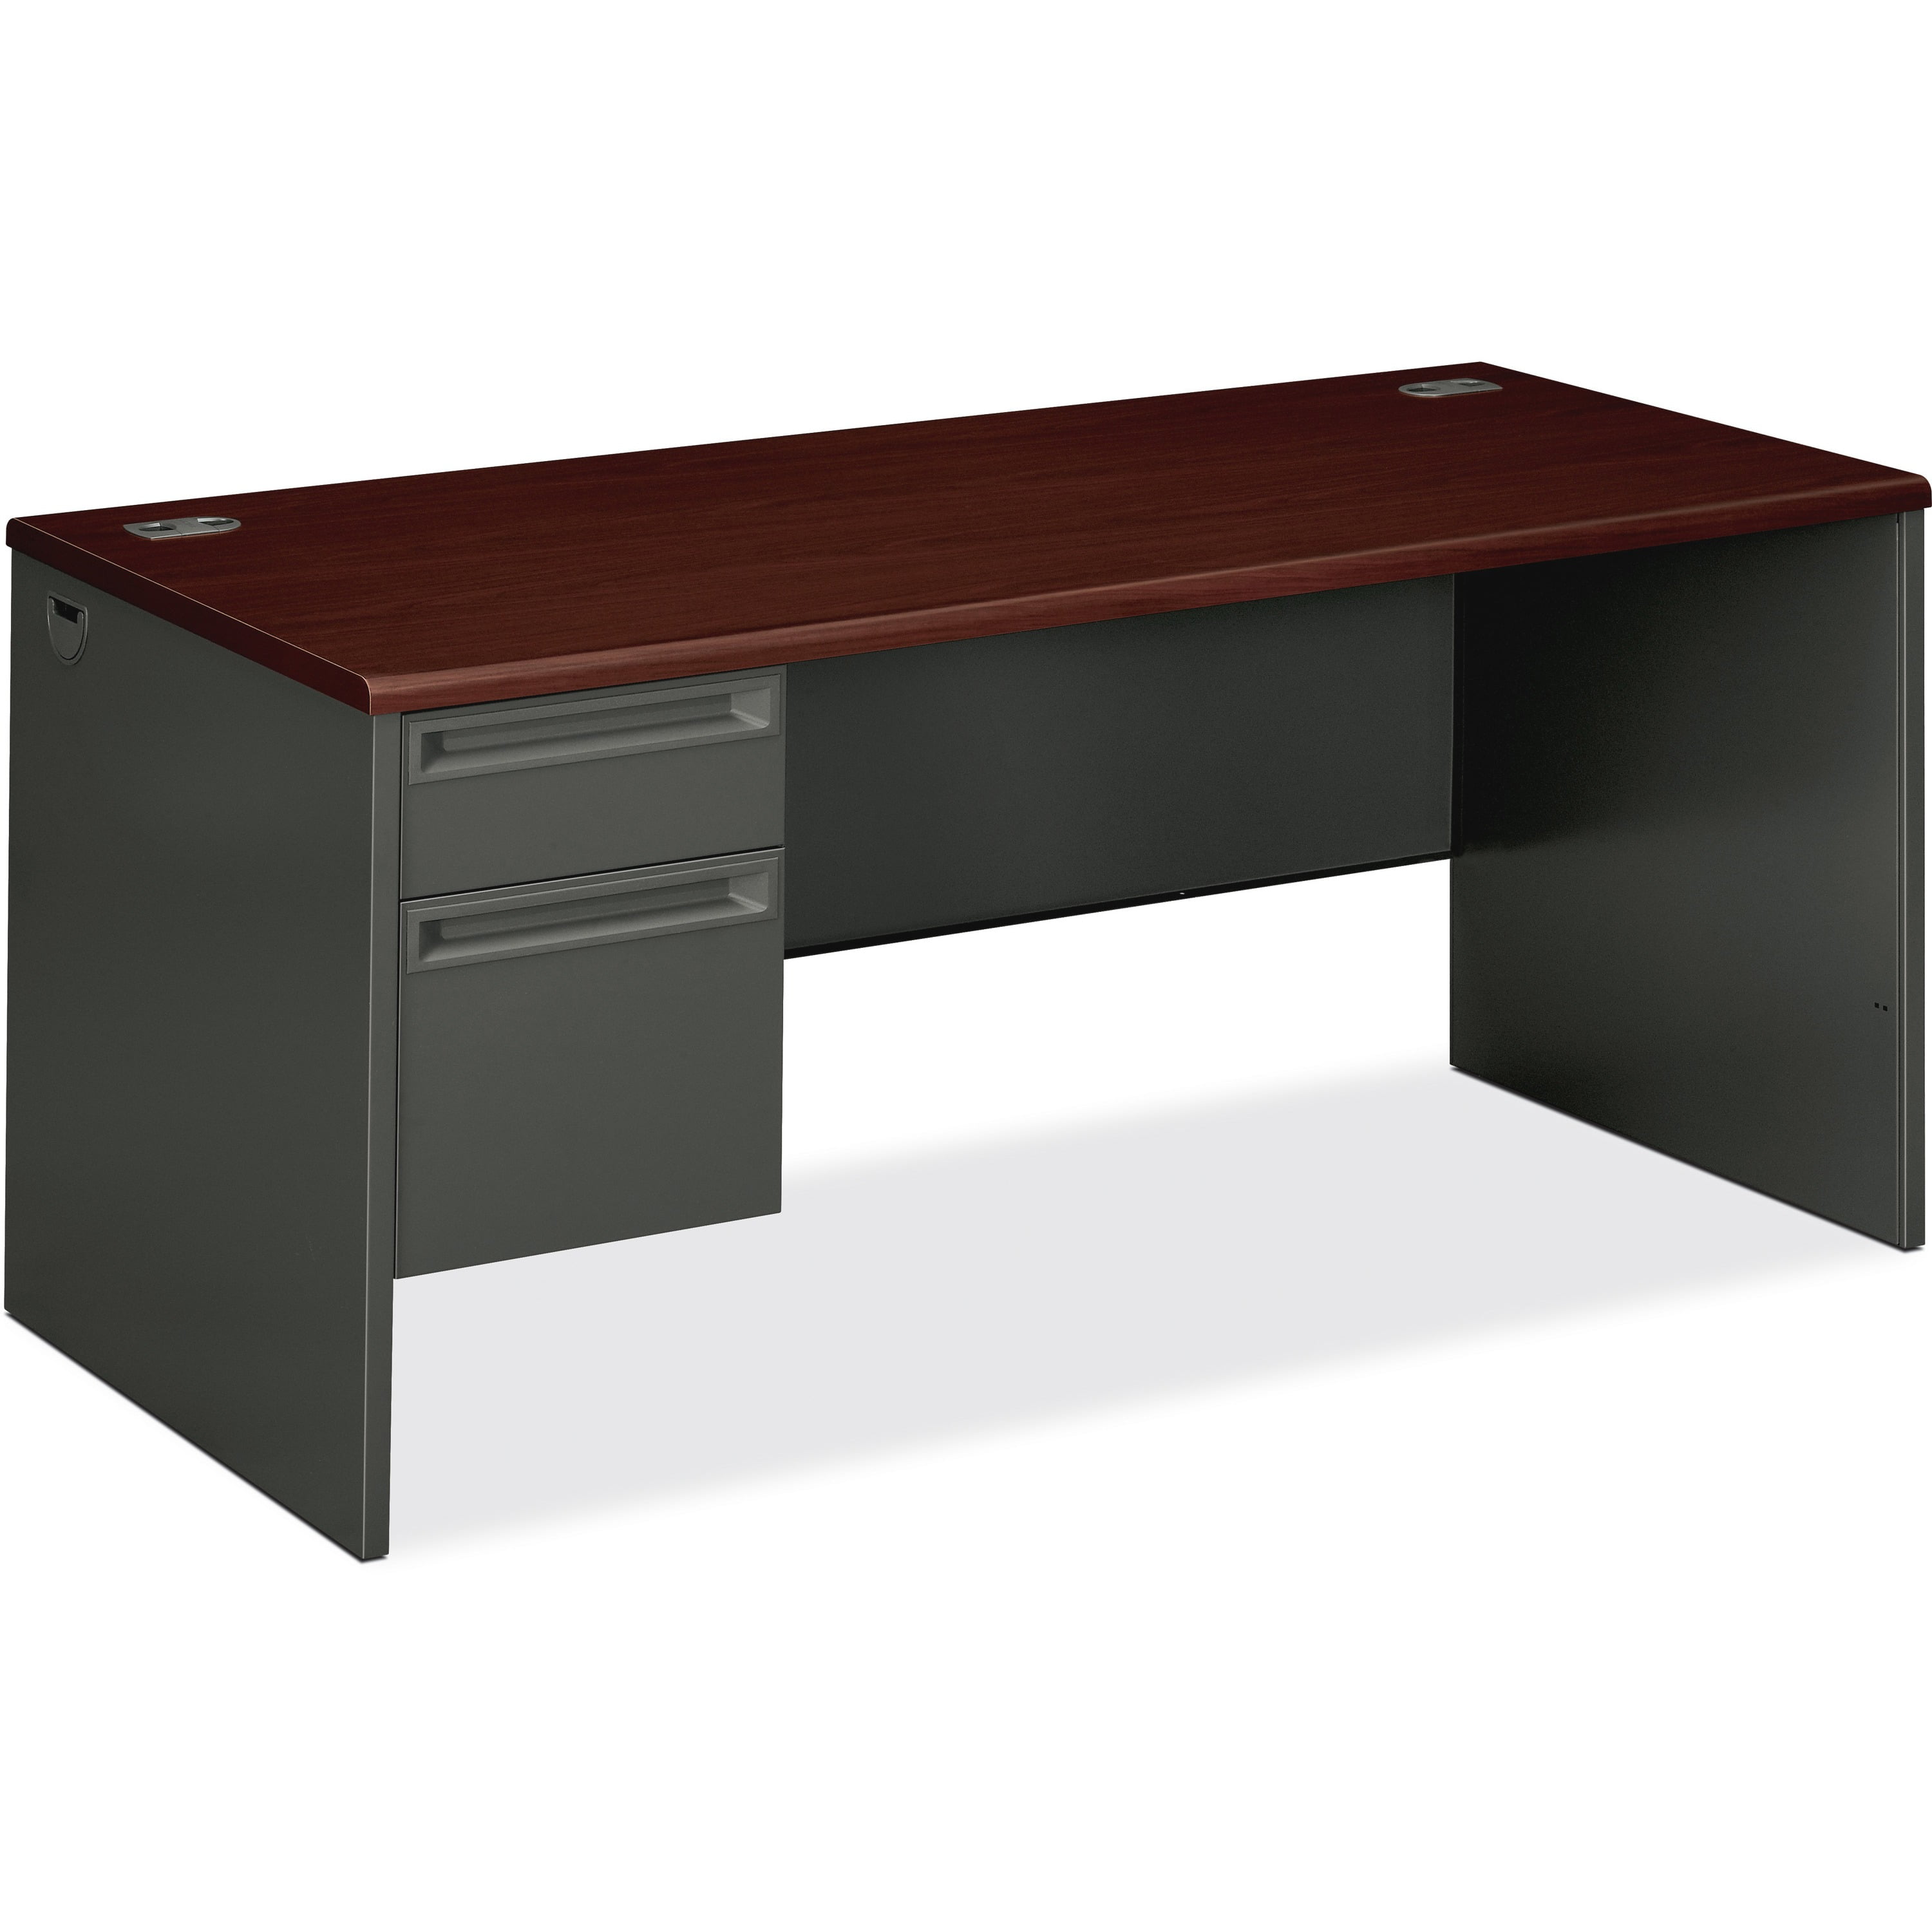 48"W x 30"D Single Pedestal Metal Desk by Hon Office Furniture w/ Laminate Top 